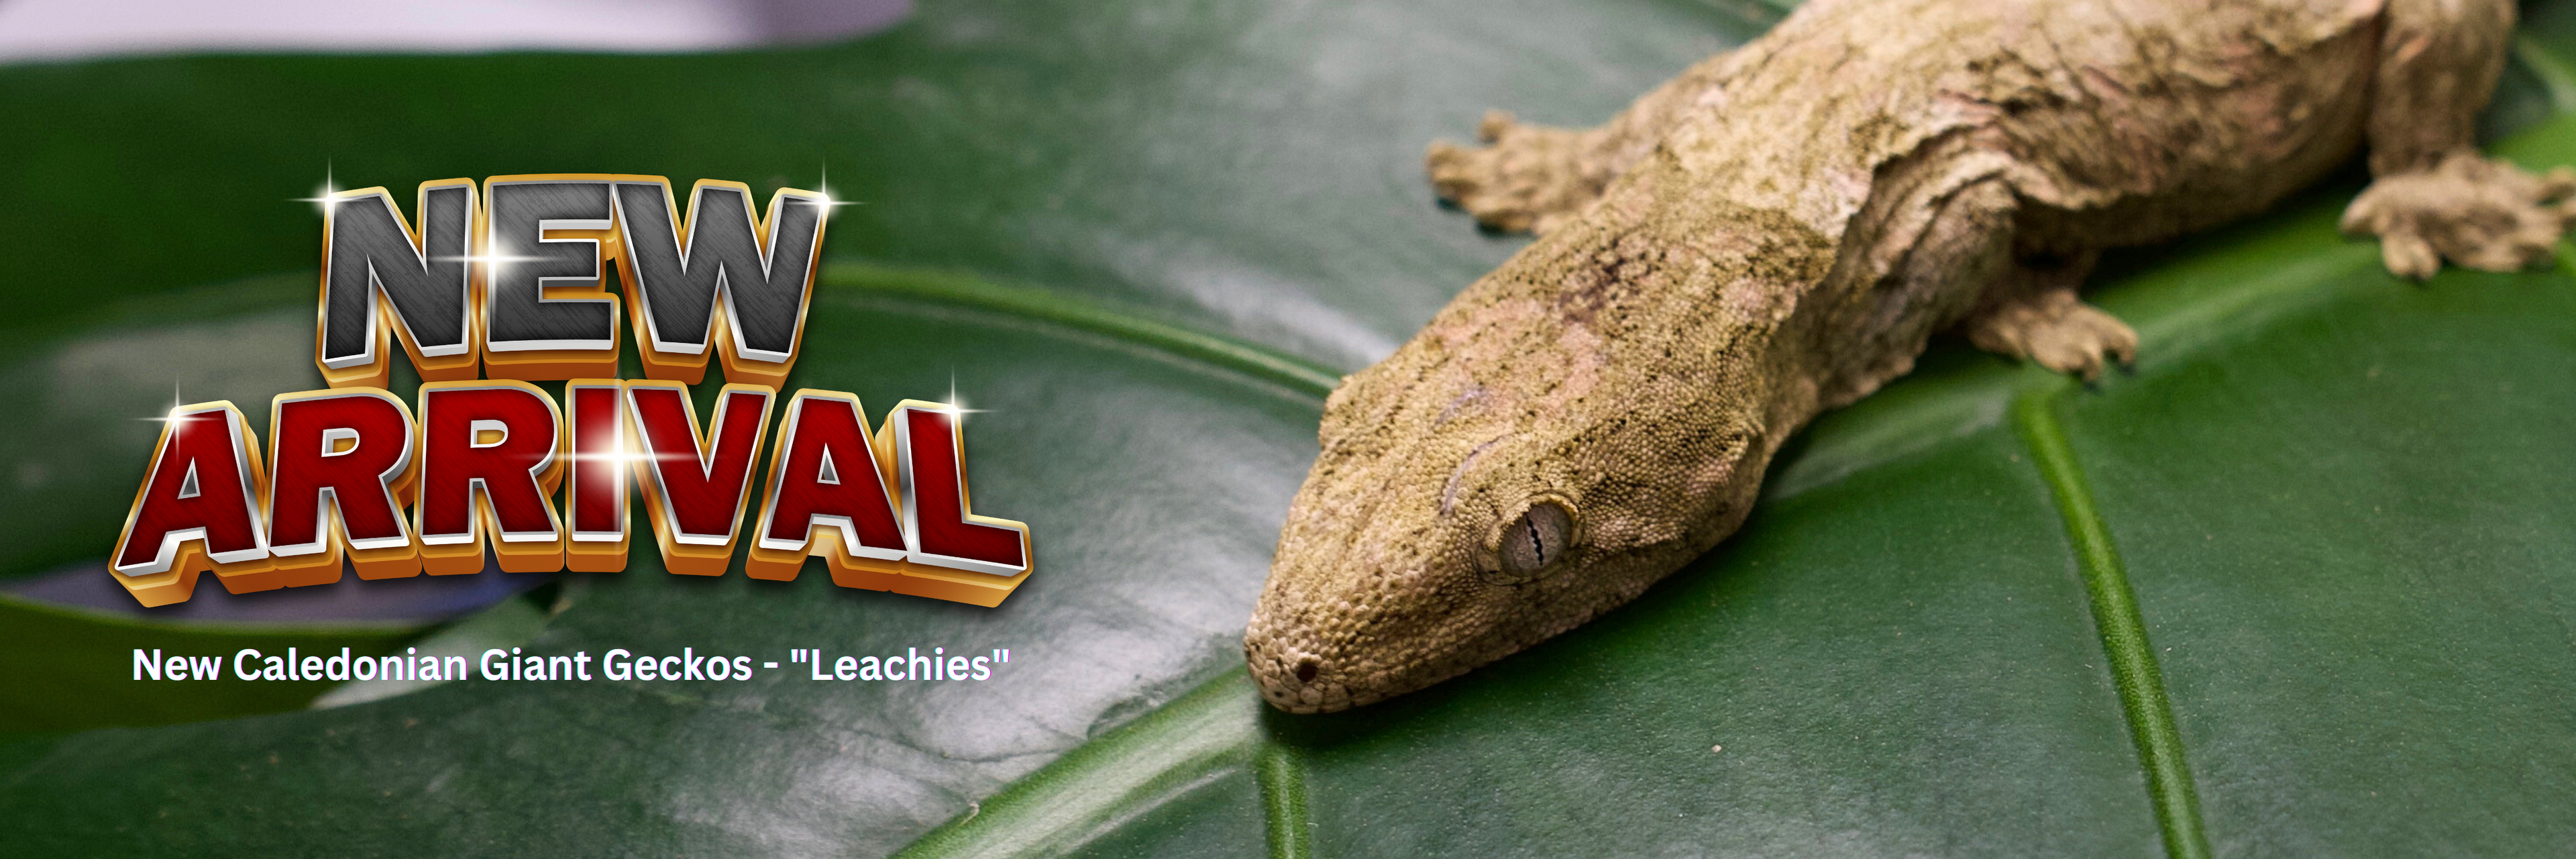 New_Caledonian_Giant_Geckos_-_Leachies